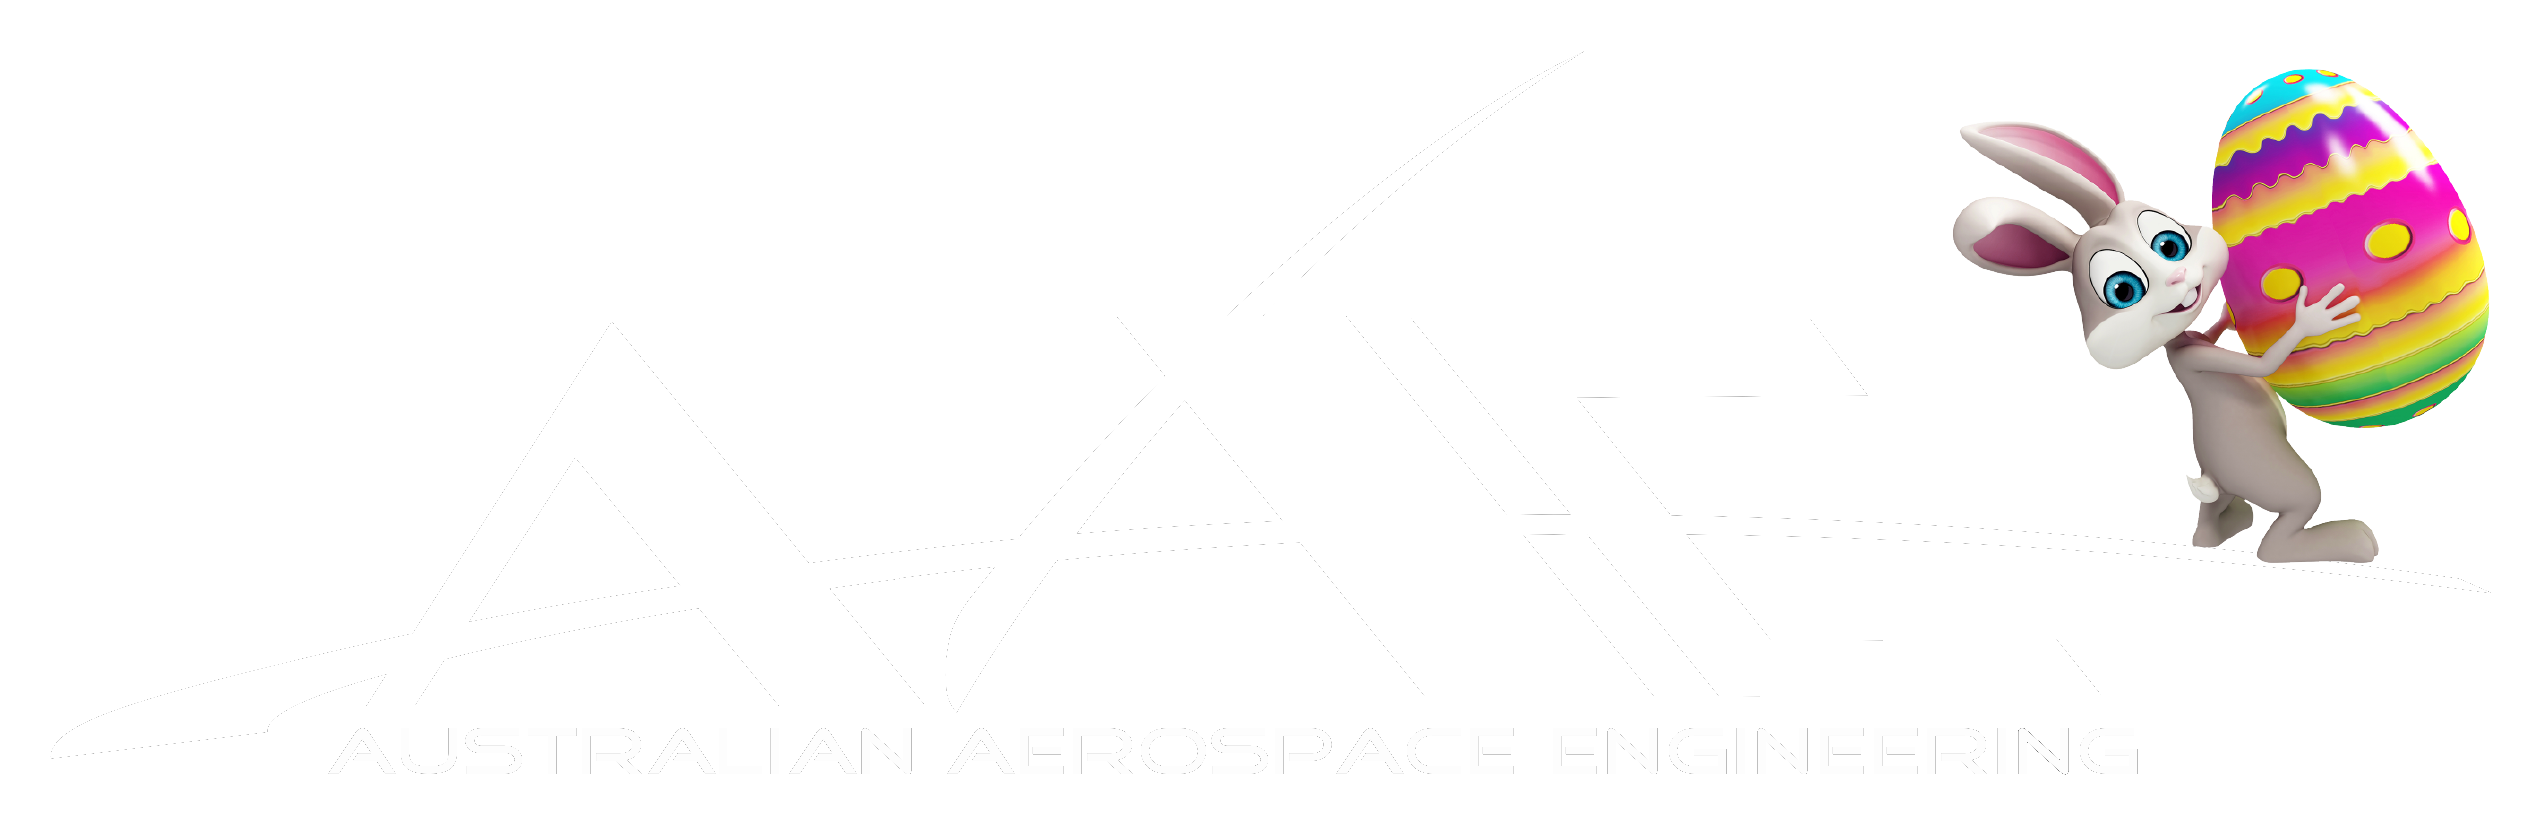 Australian Aerospace Engineering